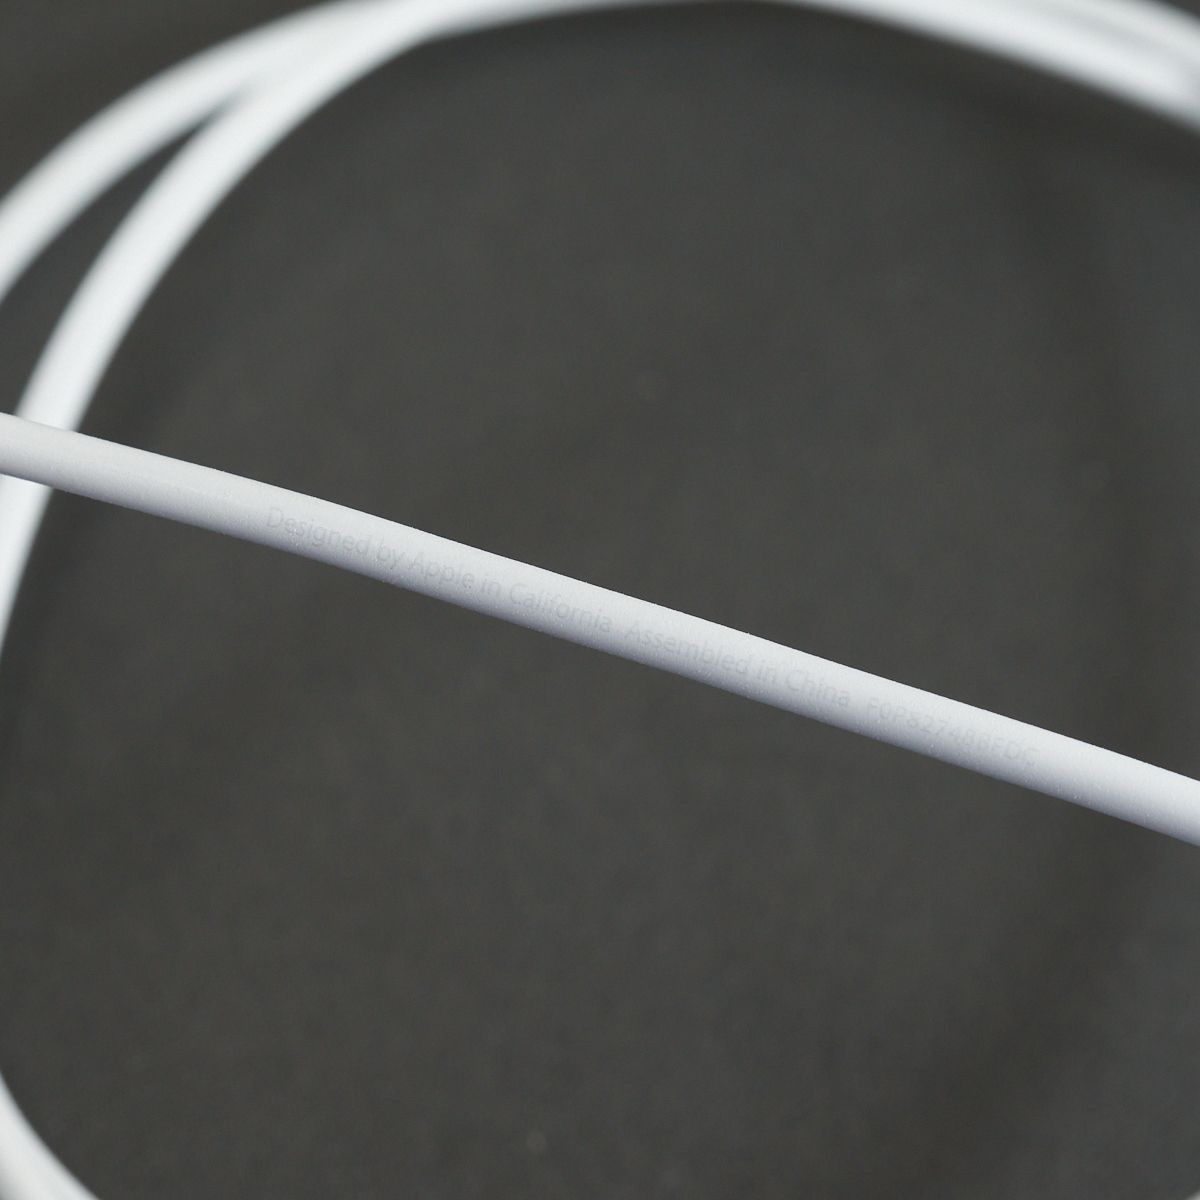 Apple оригинальный Lightning USB кабель 1.0m USED товар Apple подсветка кабель iPhone iPod исправно работающий товар б/у X0665